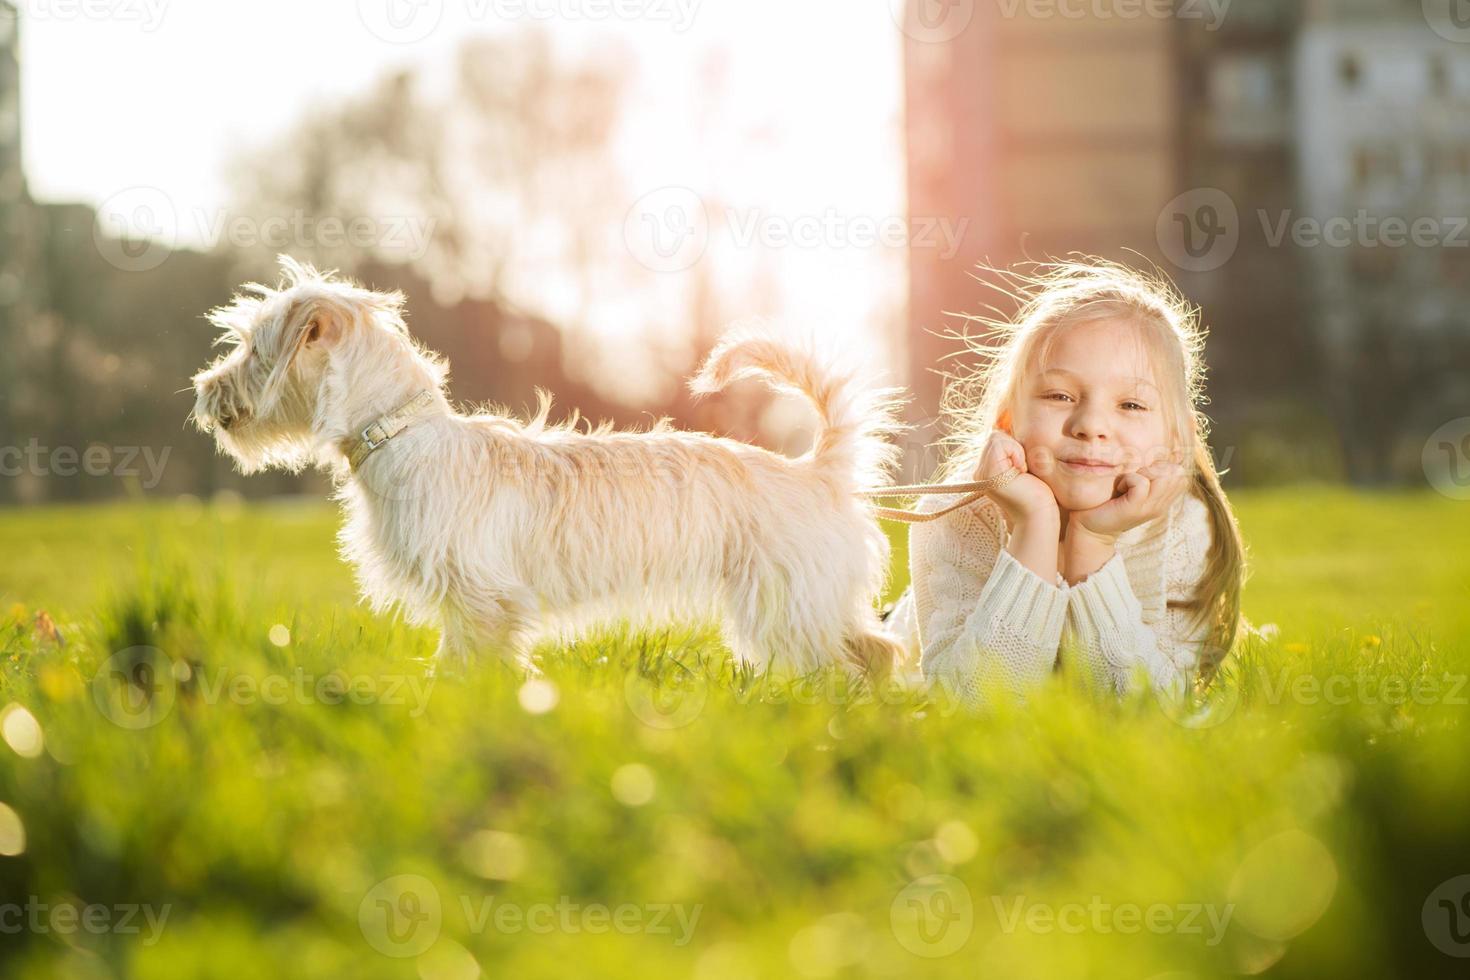 weinig meisje met haar puppy hond foto